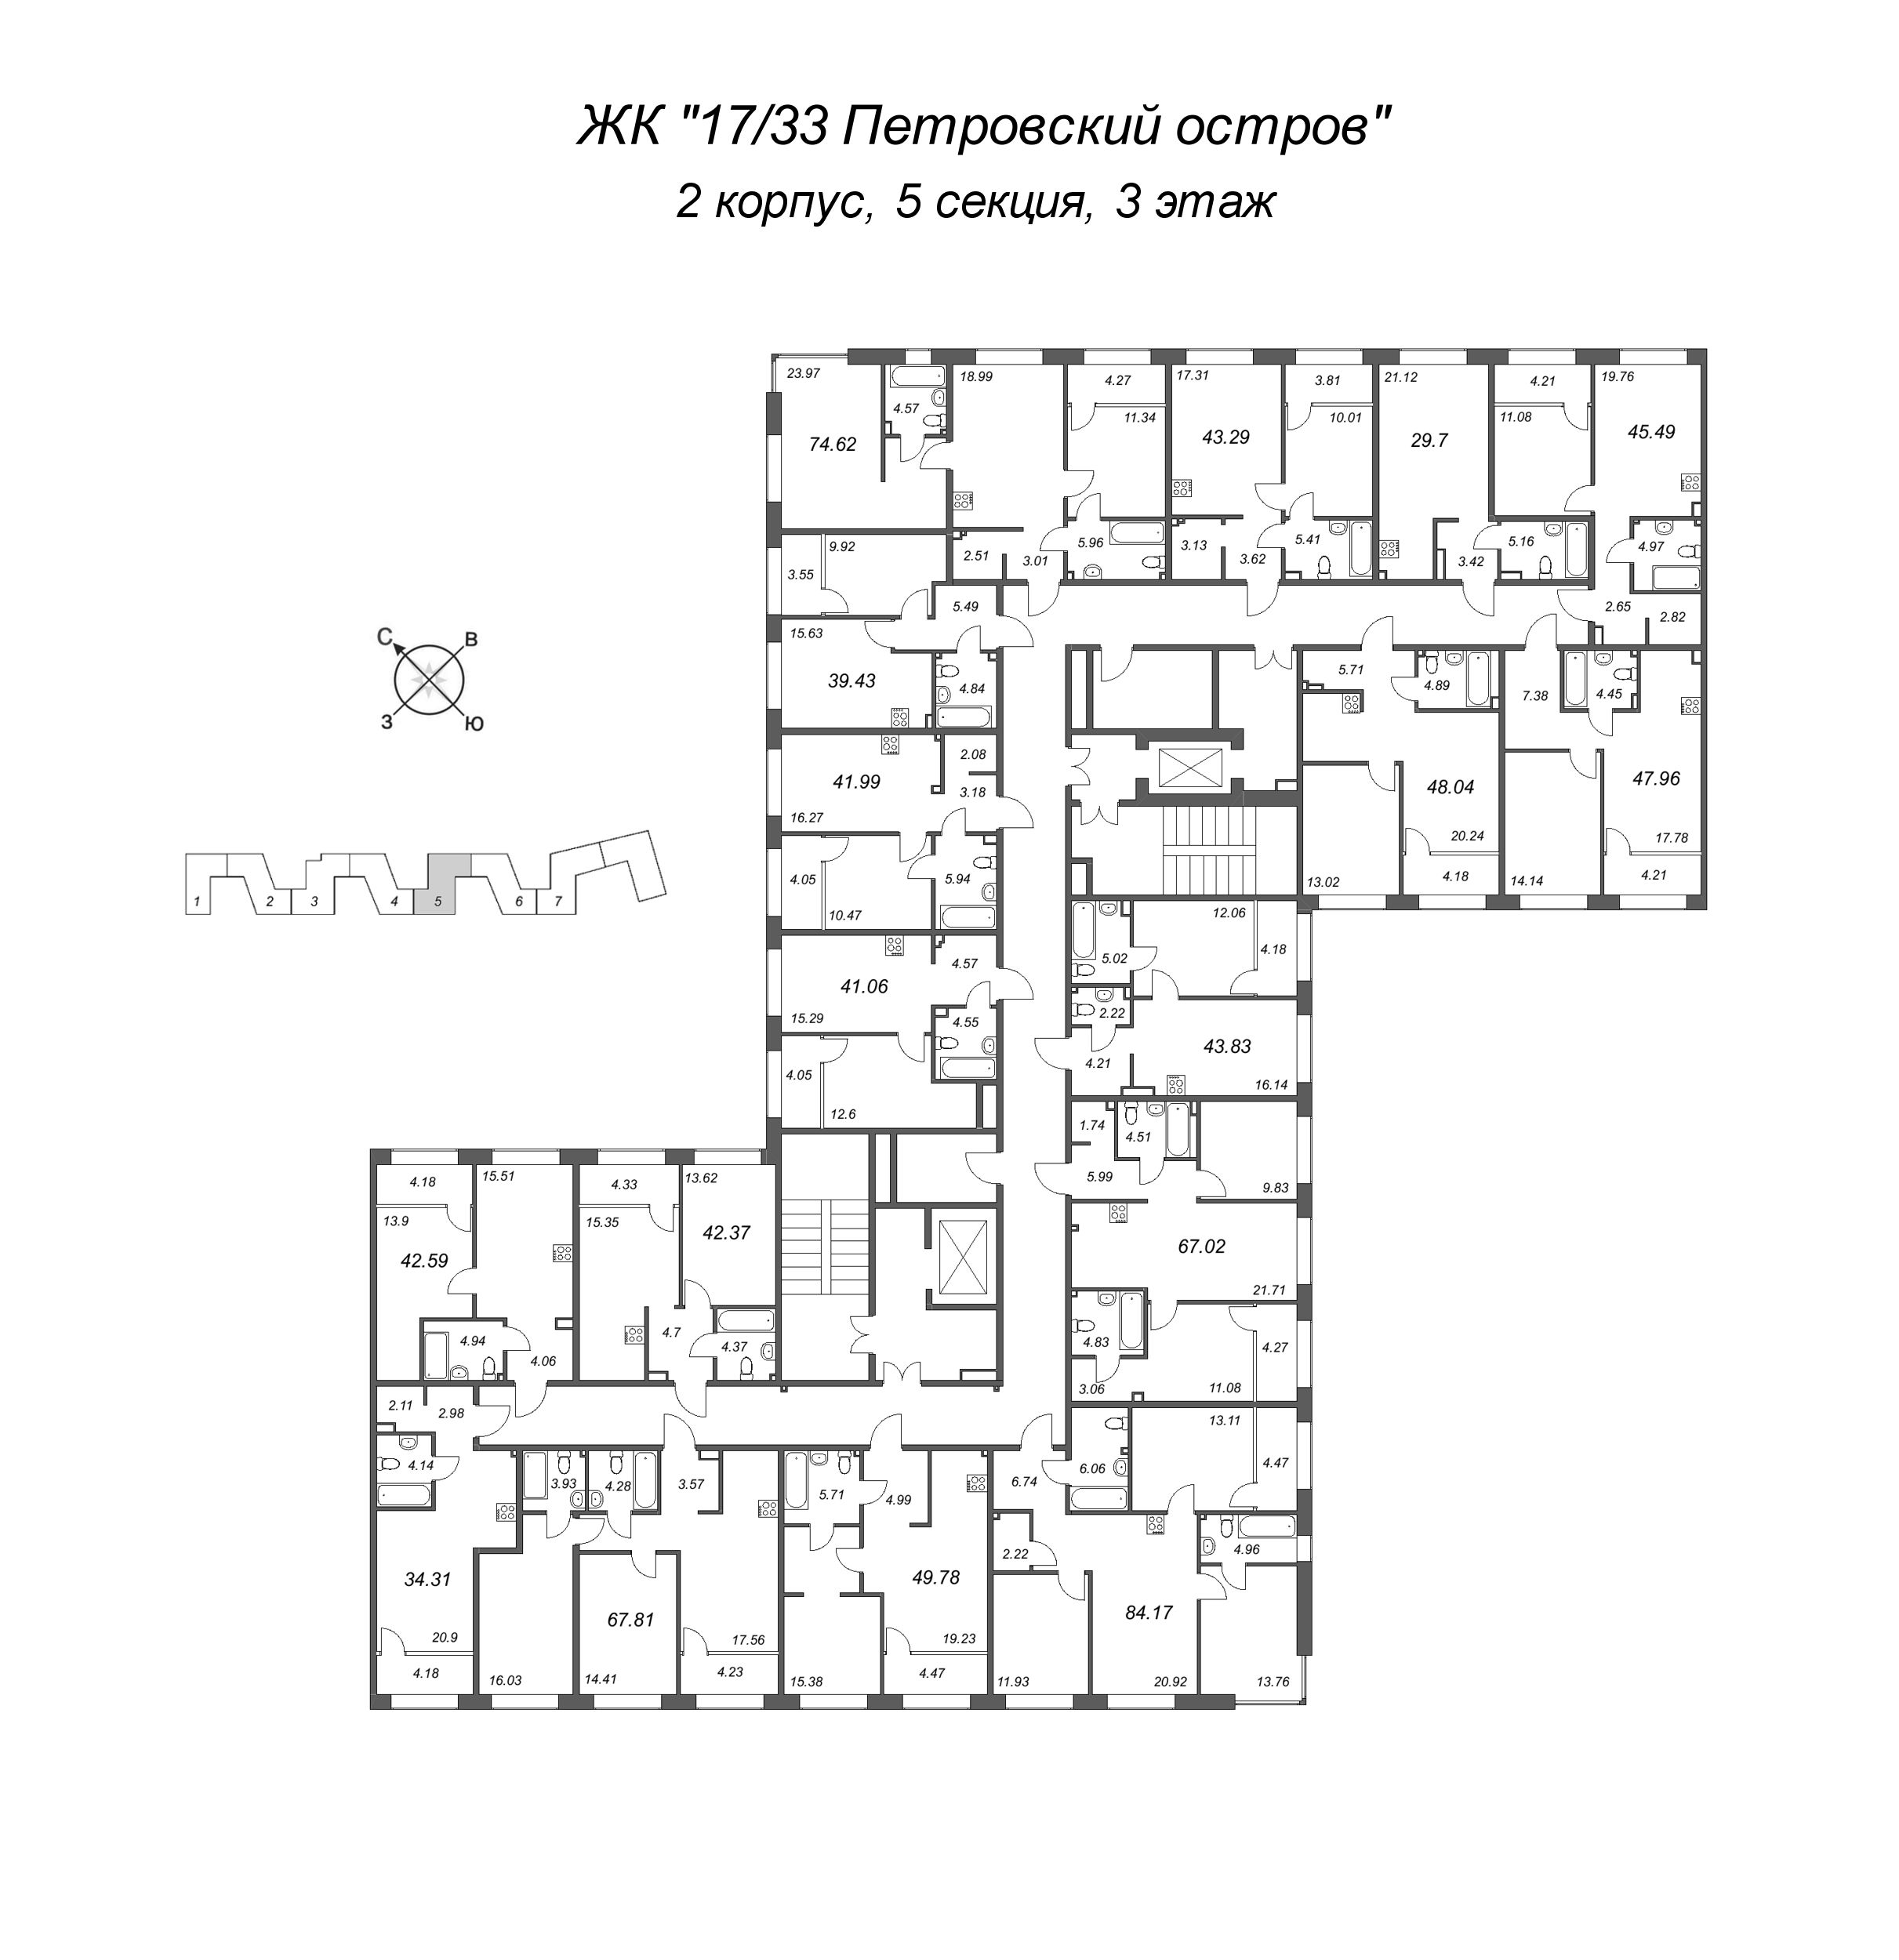 2-комнатная (Евро) квартира, 41.99 м² - планировка этажа